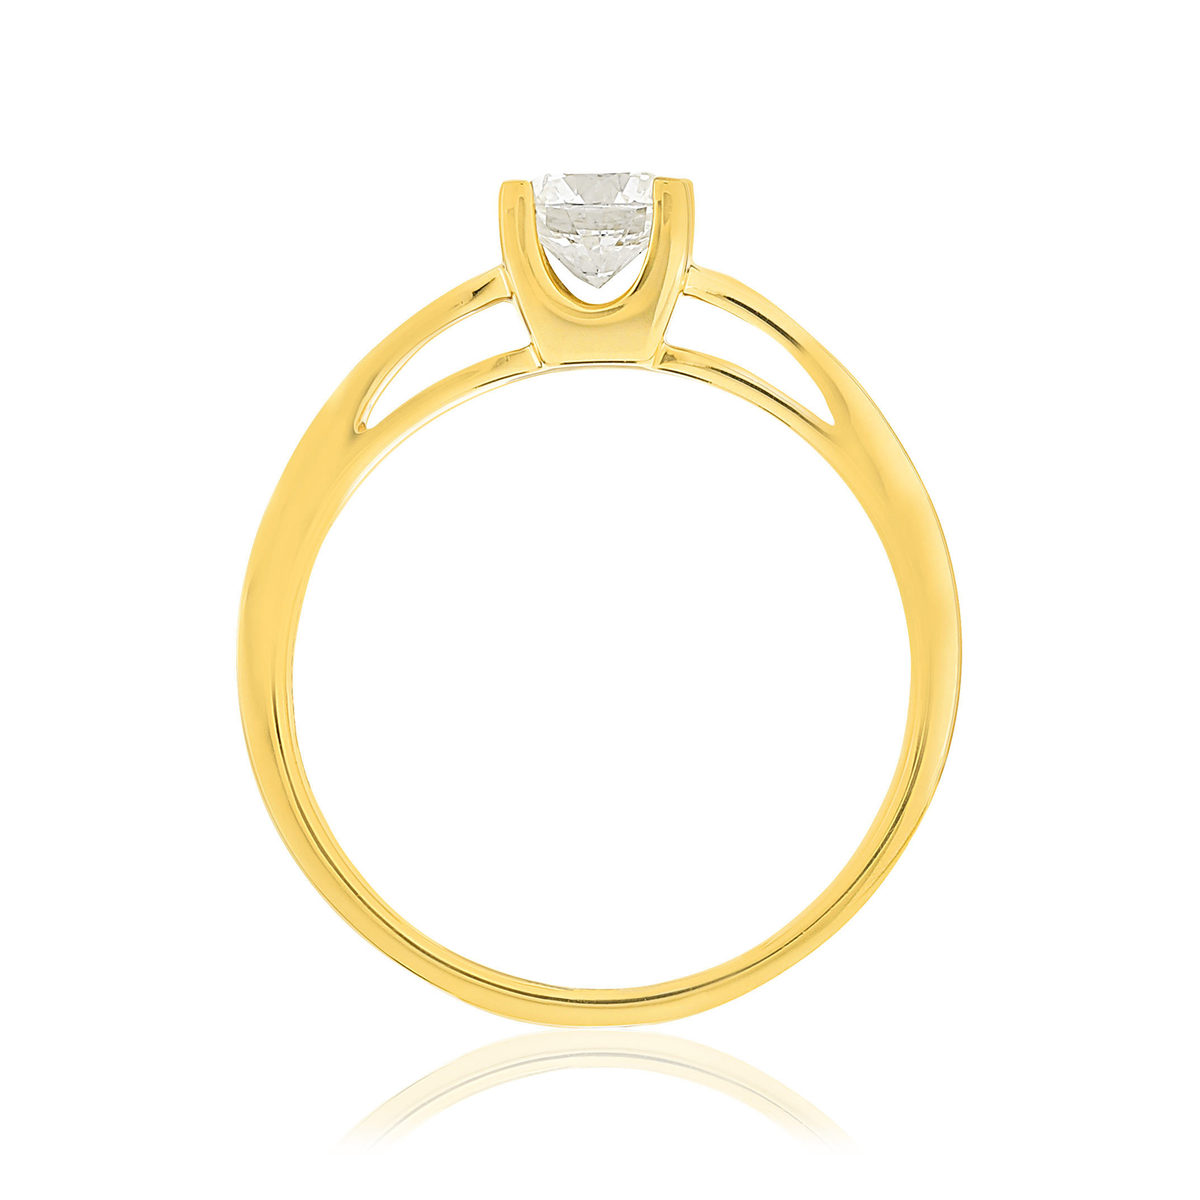 Solitaire or jaune 750 diamant synthétique 0,5 carat - vue 2